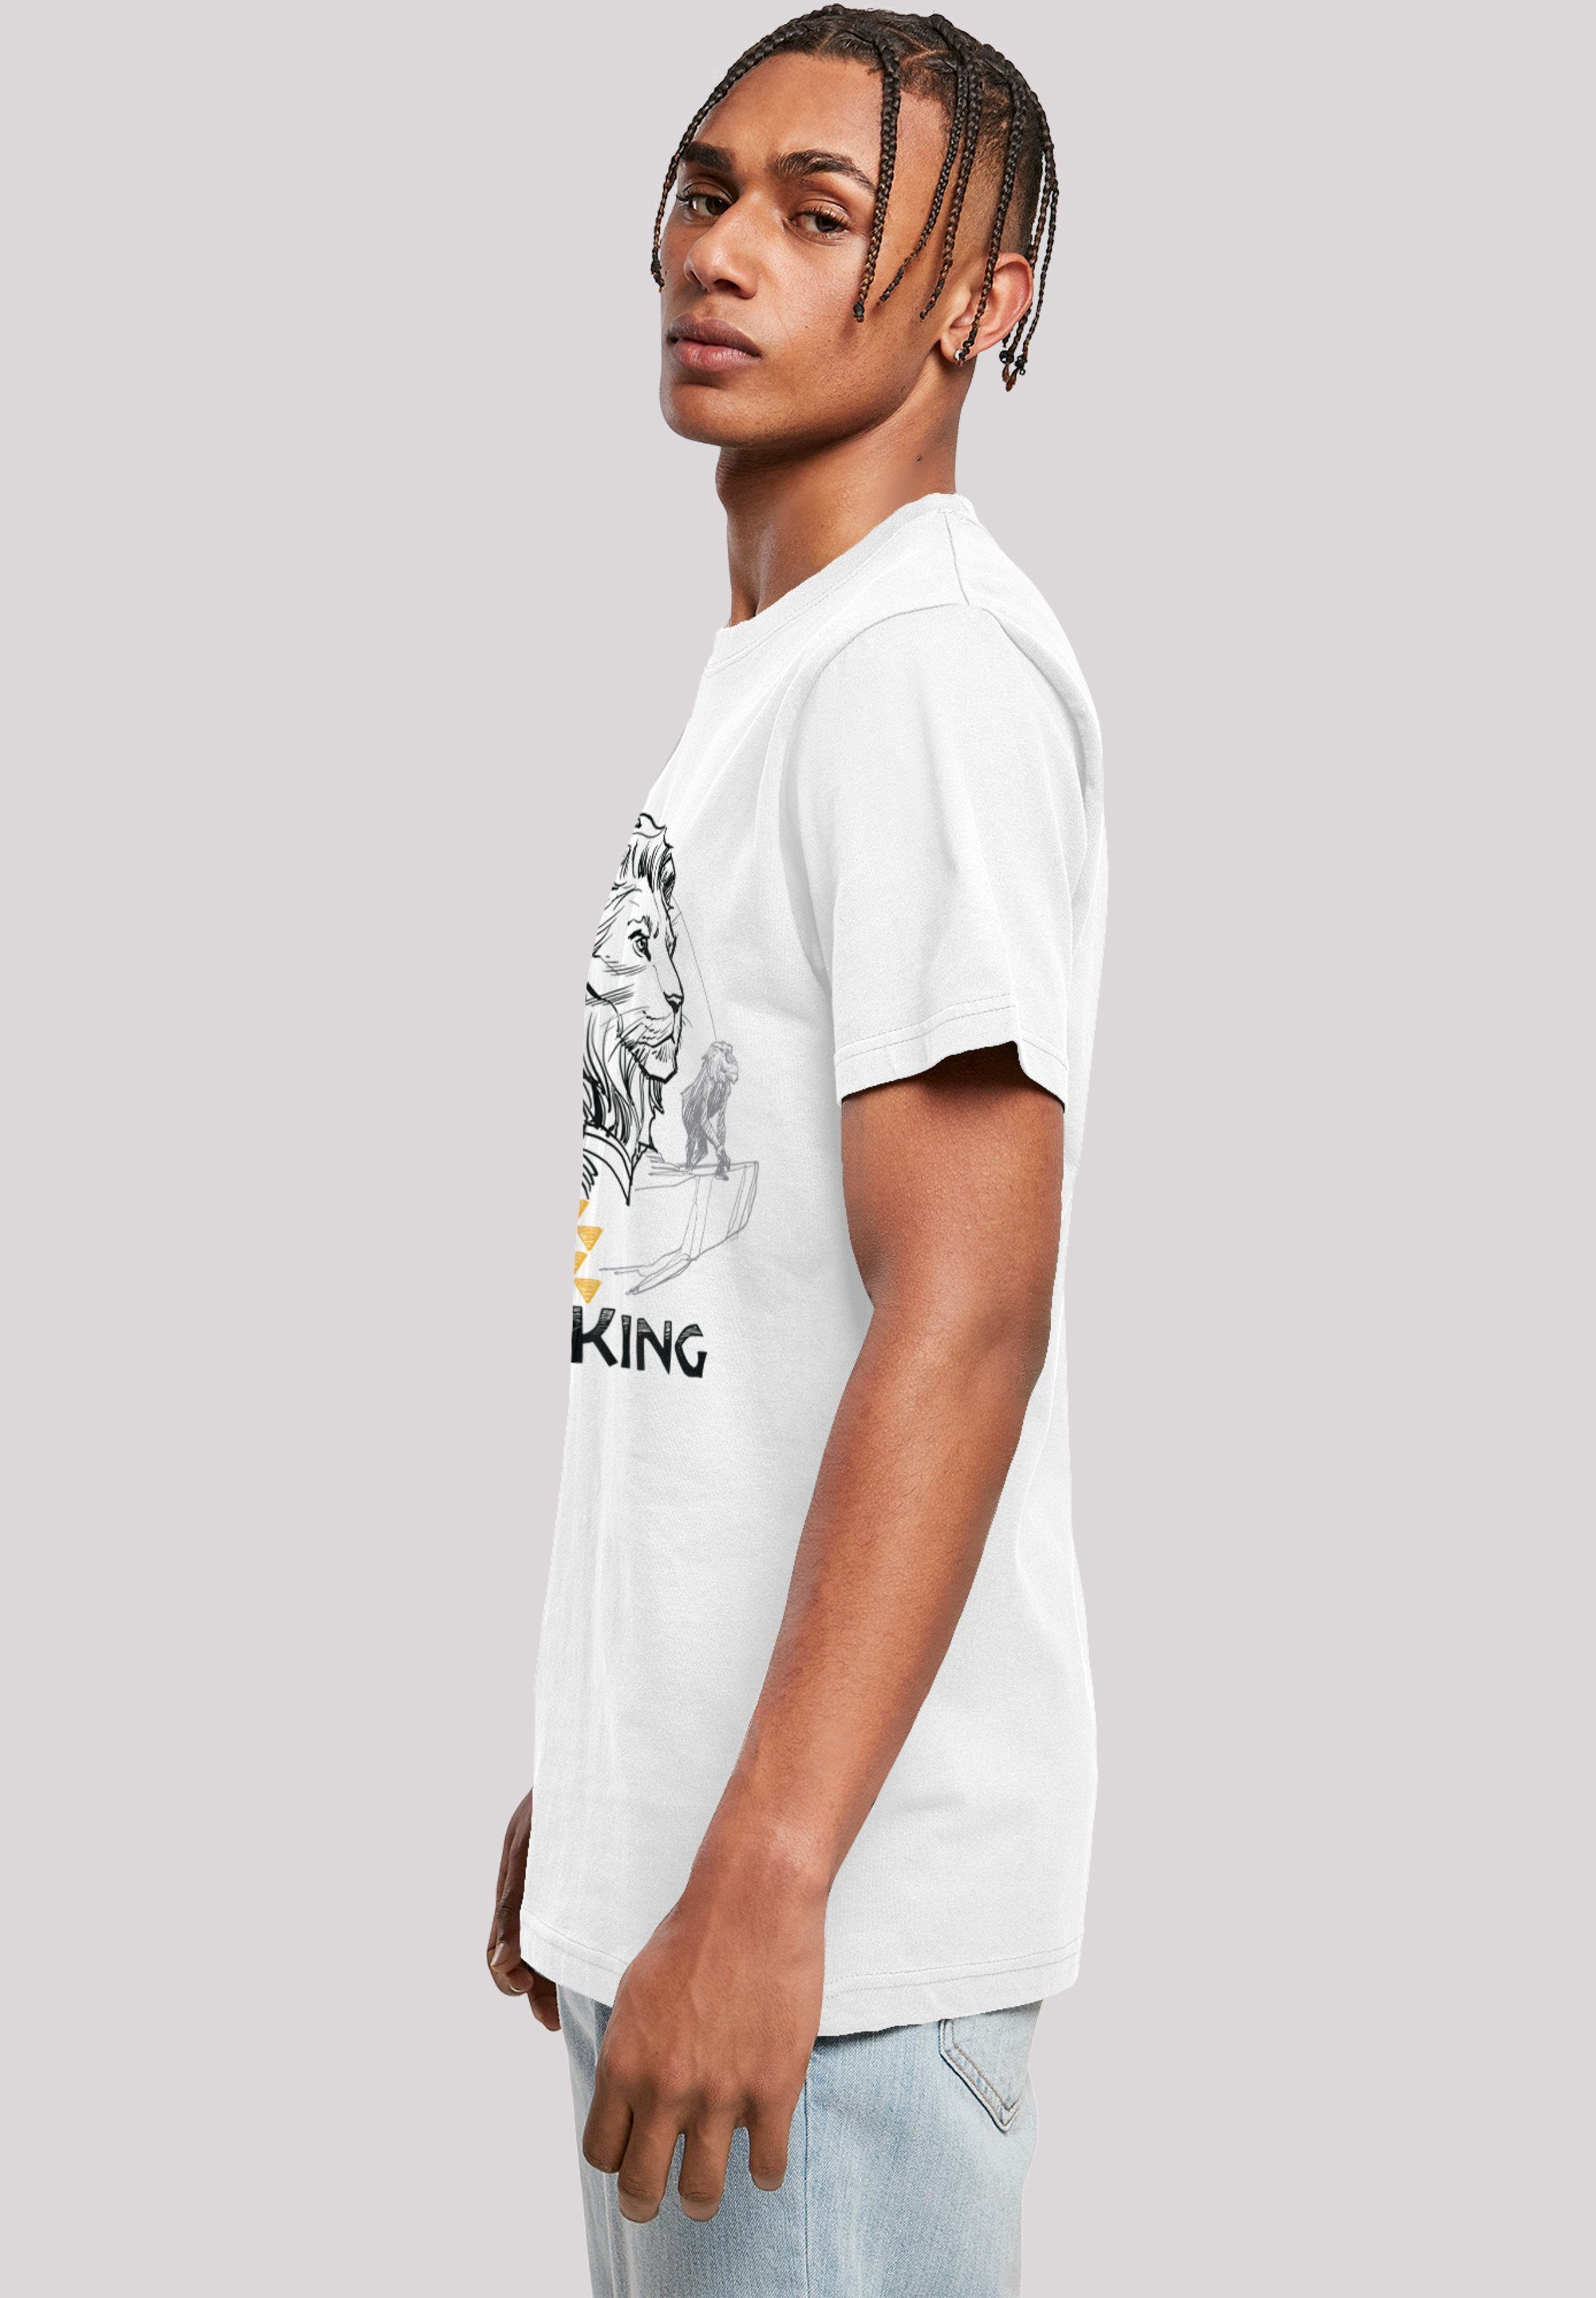 King Movie To der Be F4NT4STIC Good weiß T-Shirt König Löwen Disney It's Print